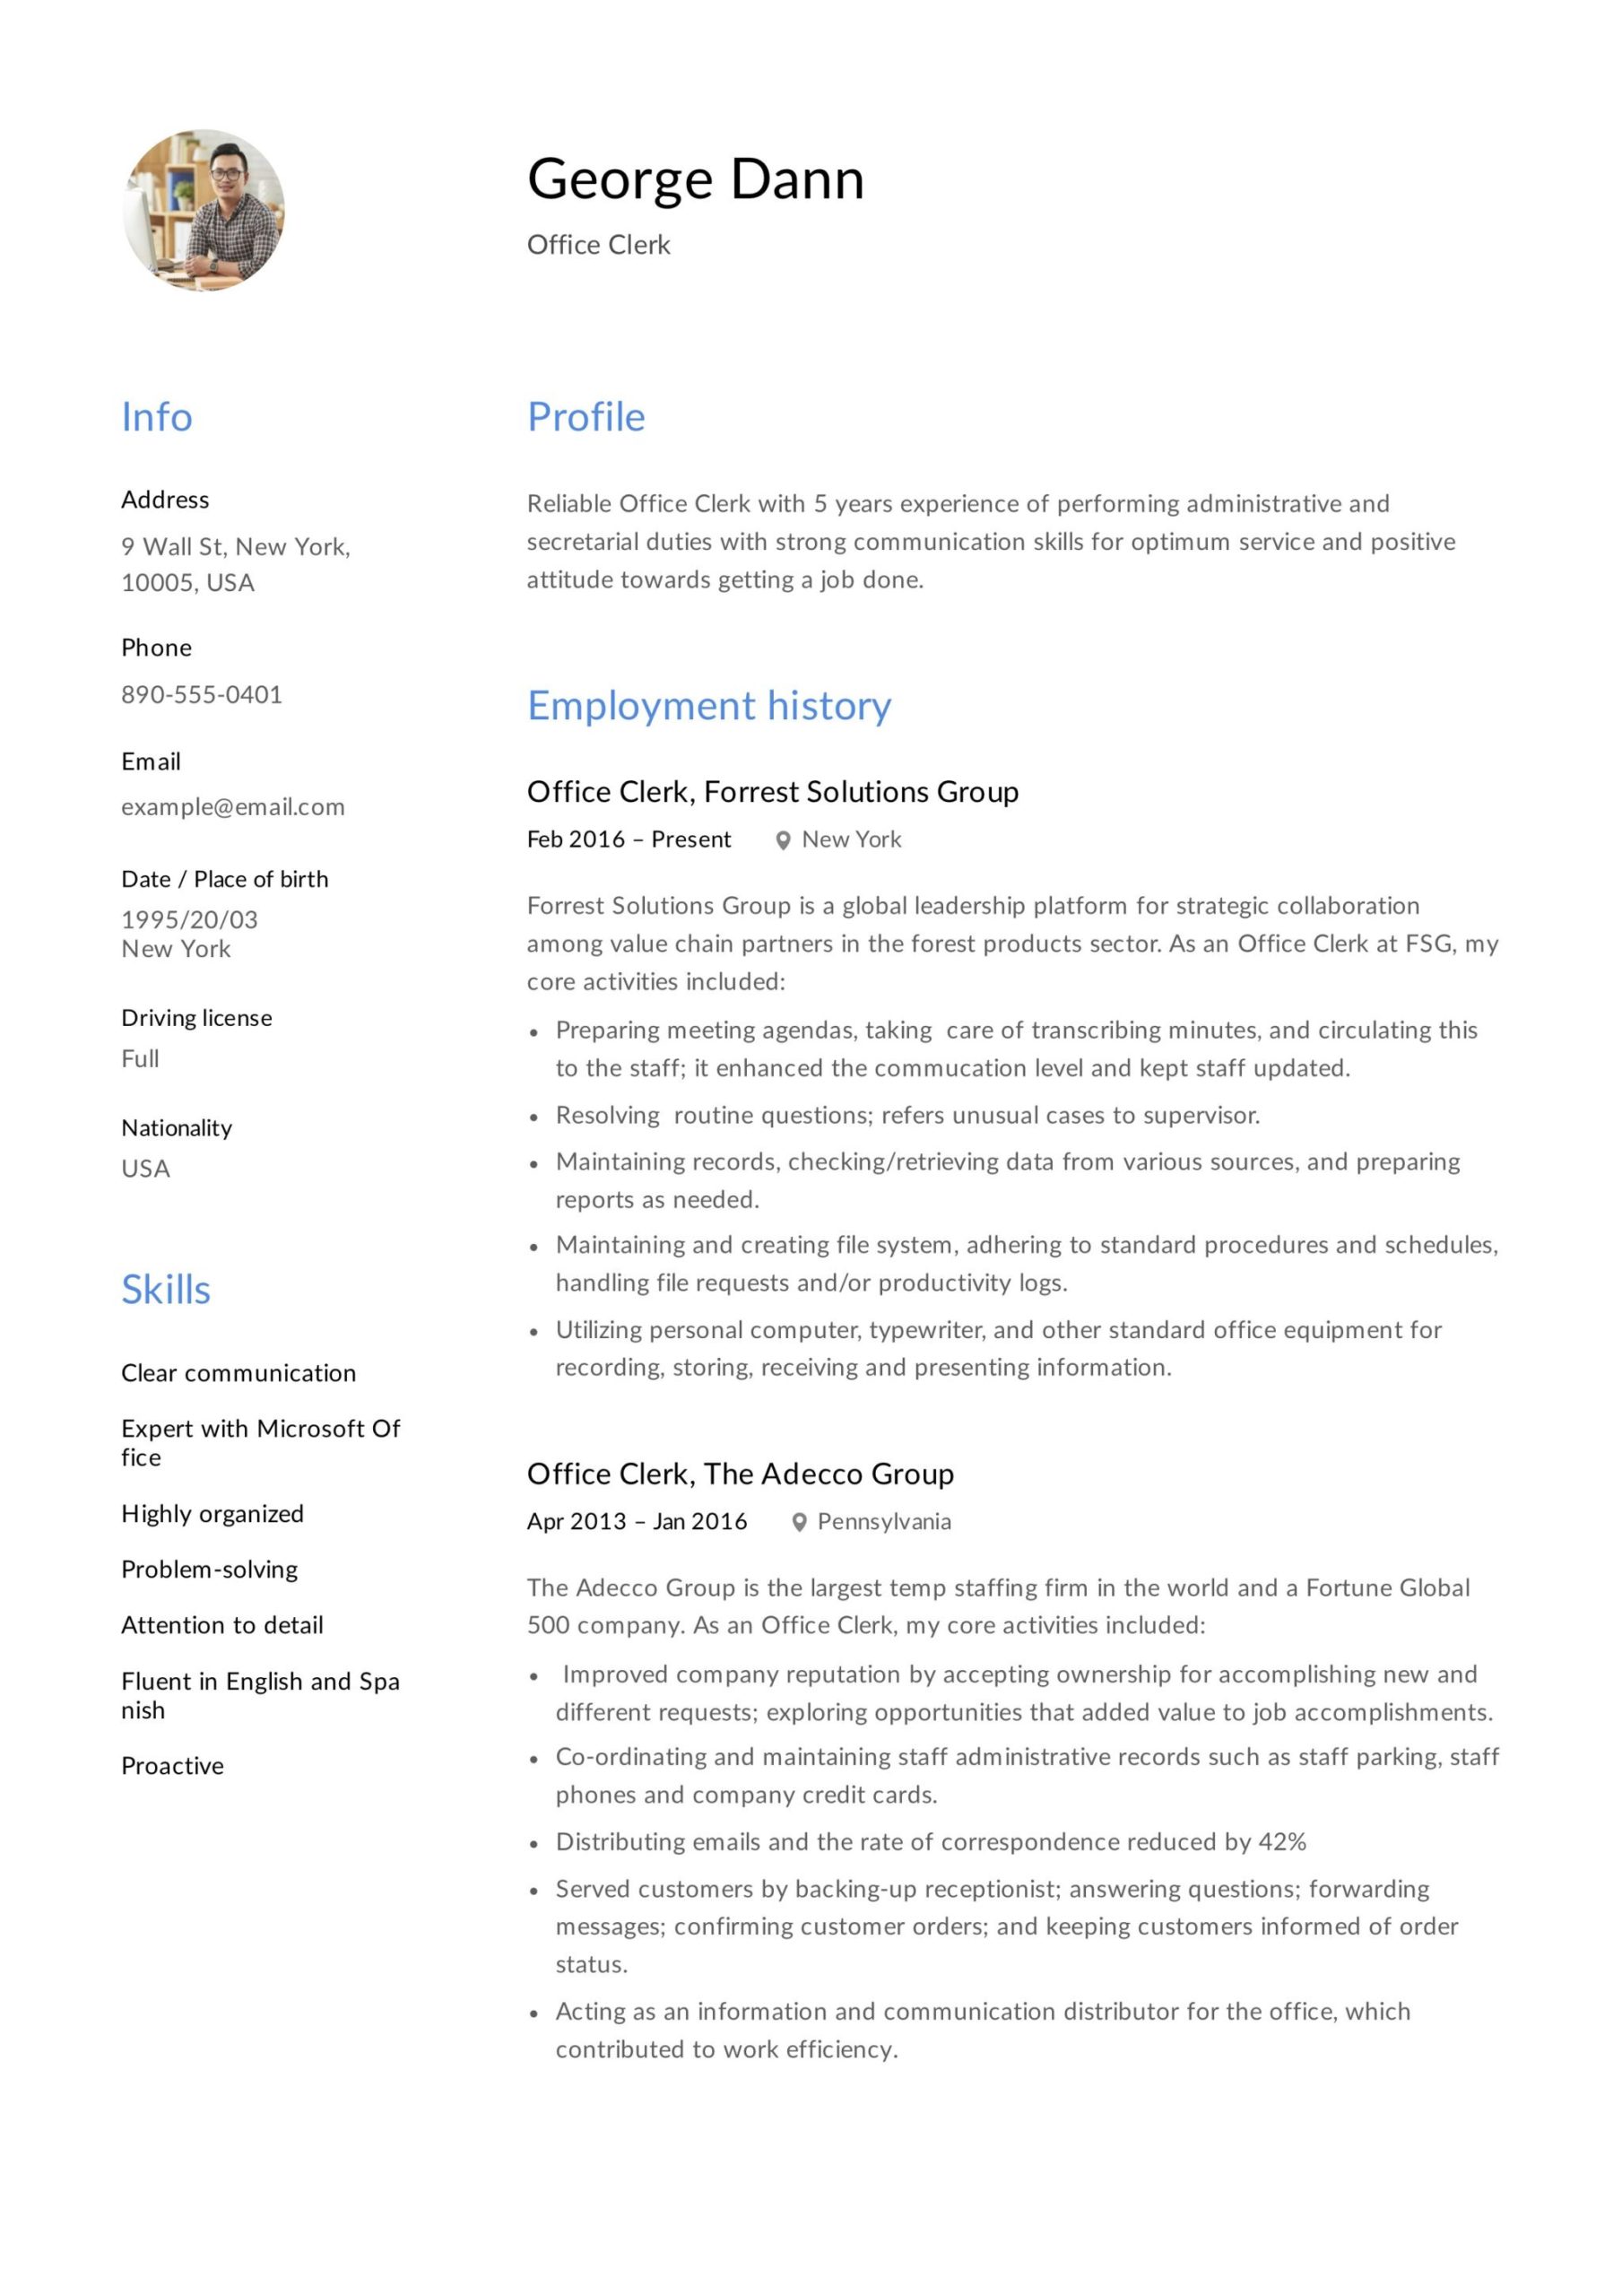 Free Sample Resume for Clerical Position Office Clerk Resume & Guide  12 Samples Pdf 2021